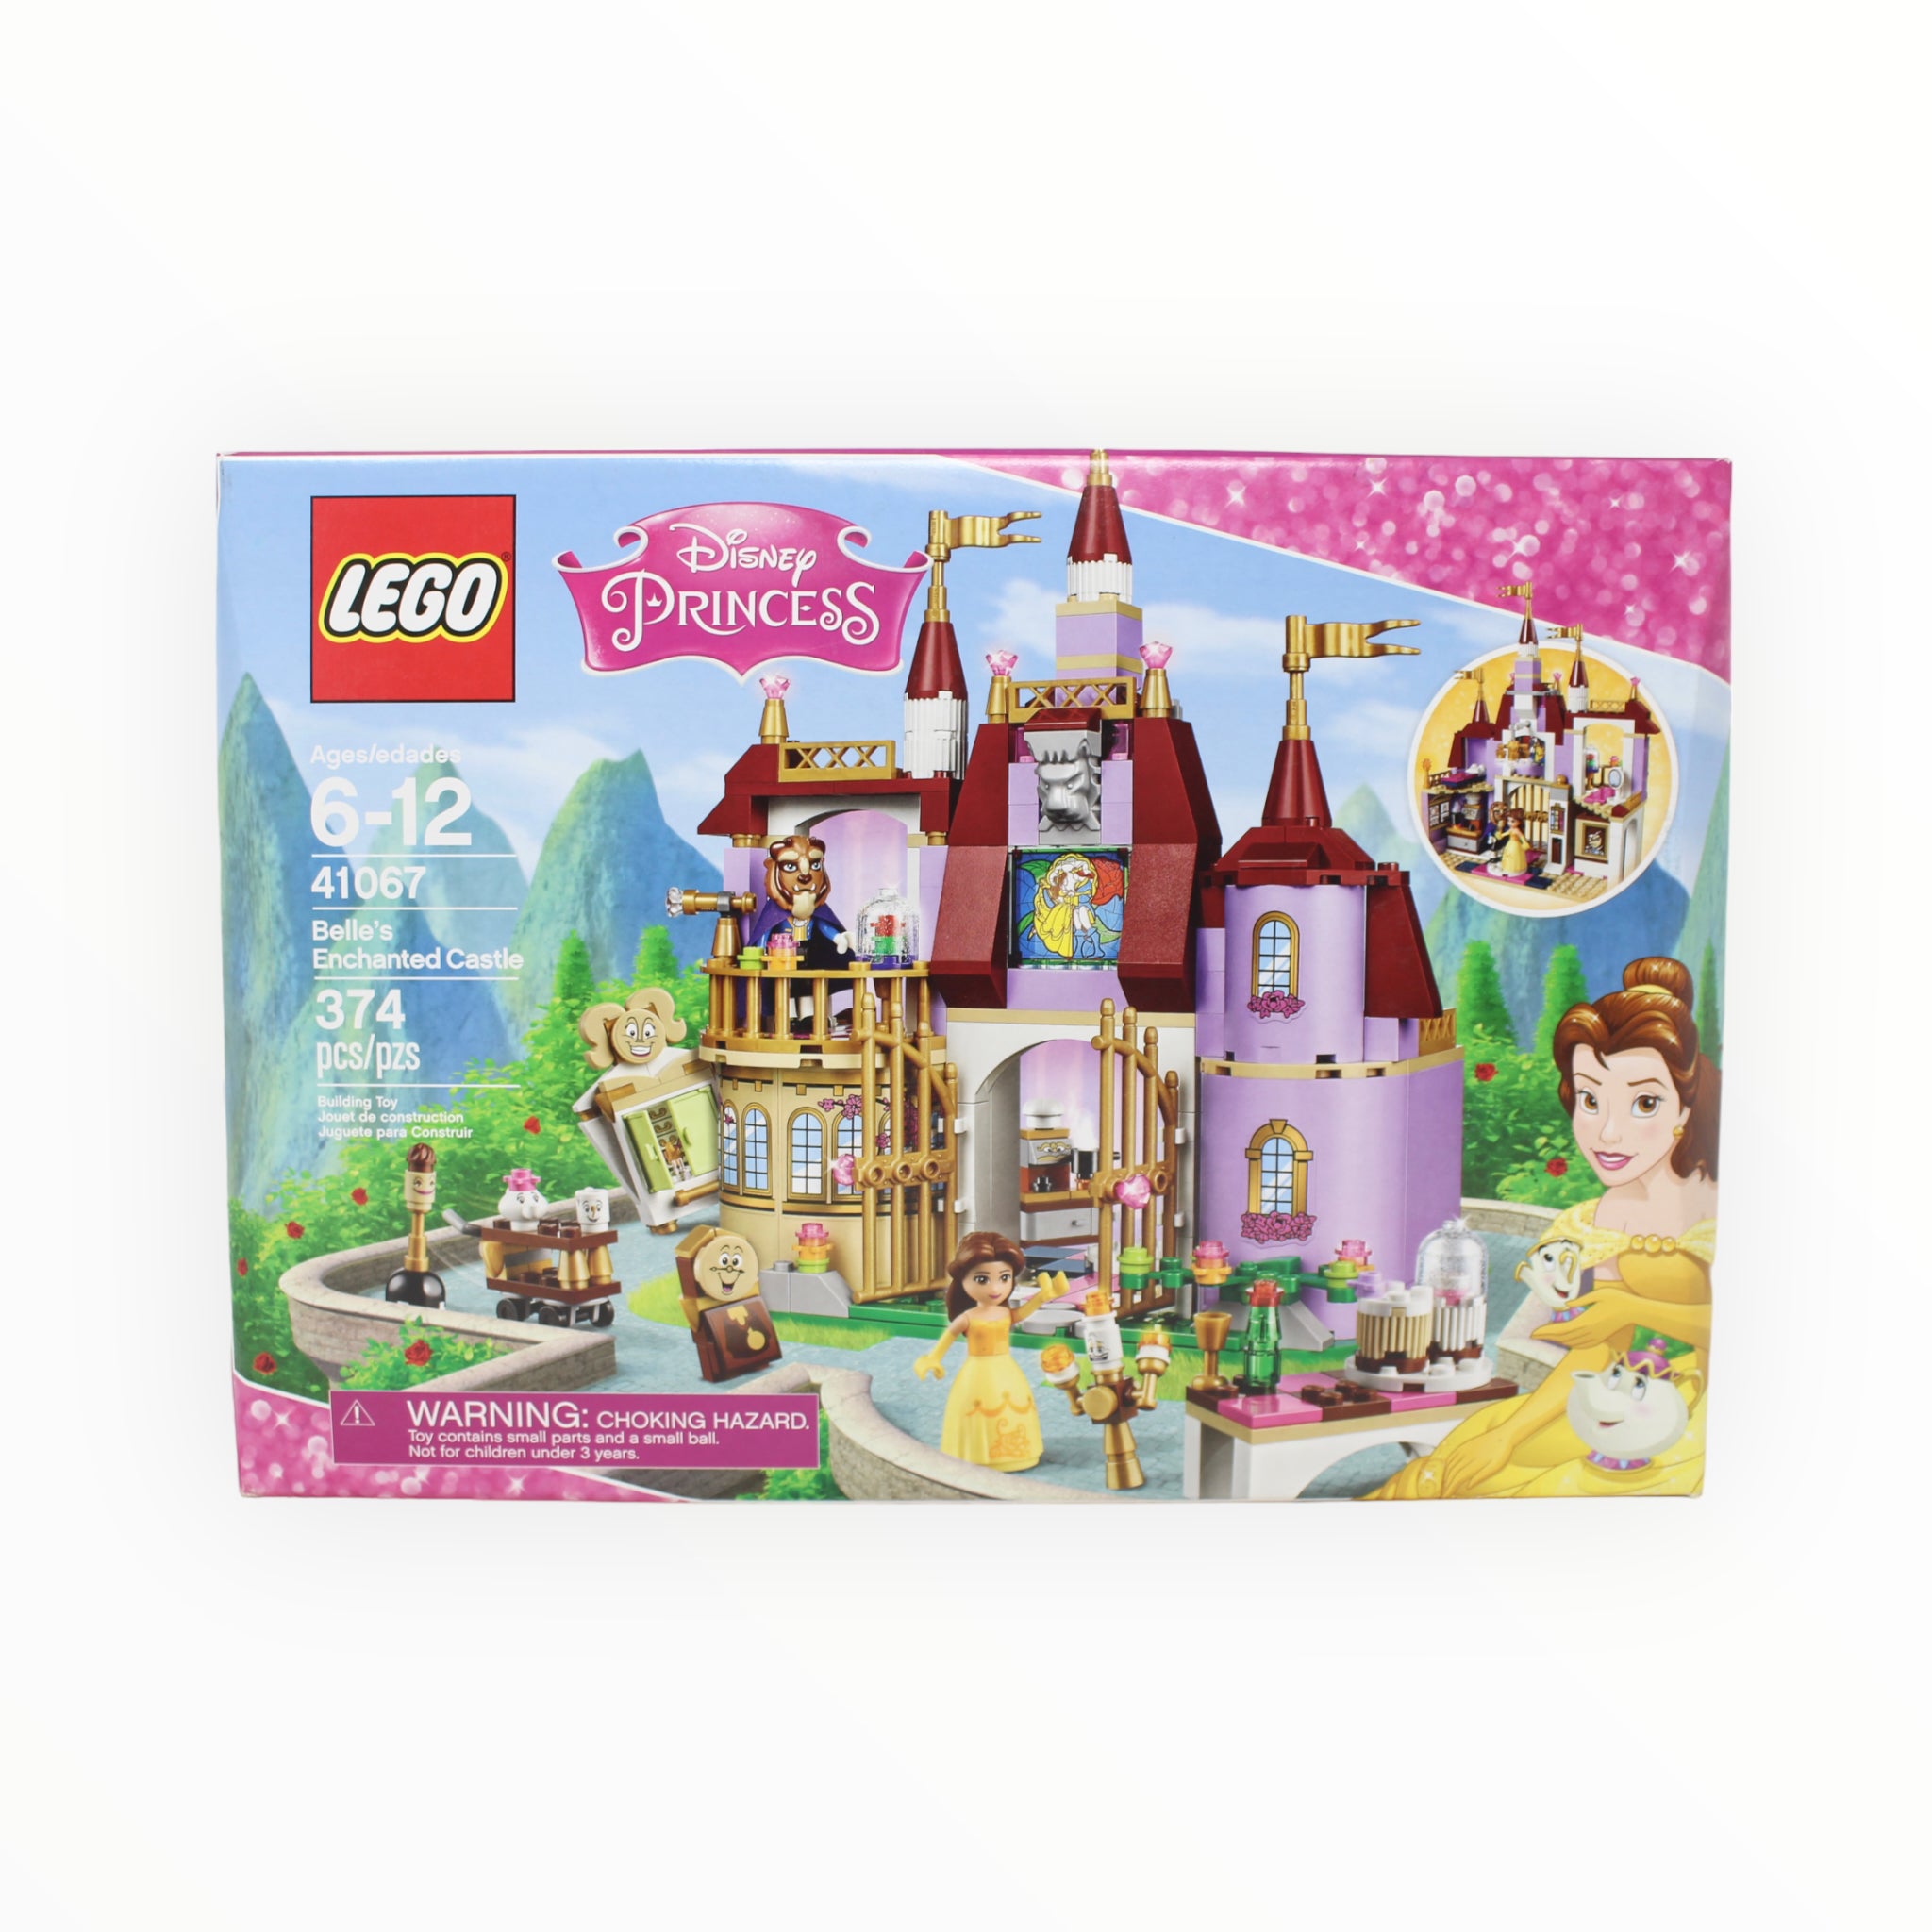 Retired Set 41067 Disney Princess Belle’s Enchanted Castle